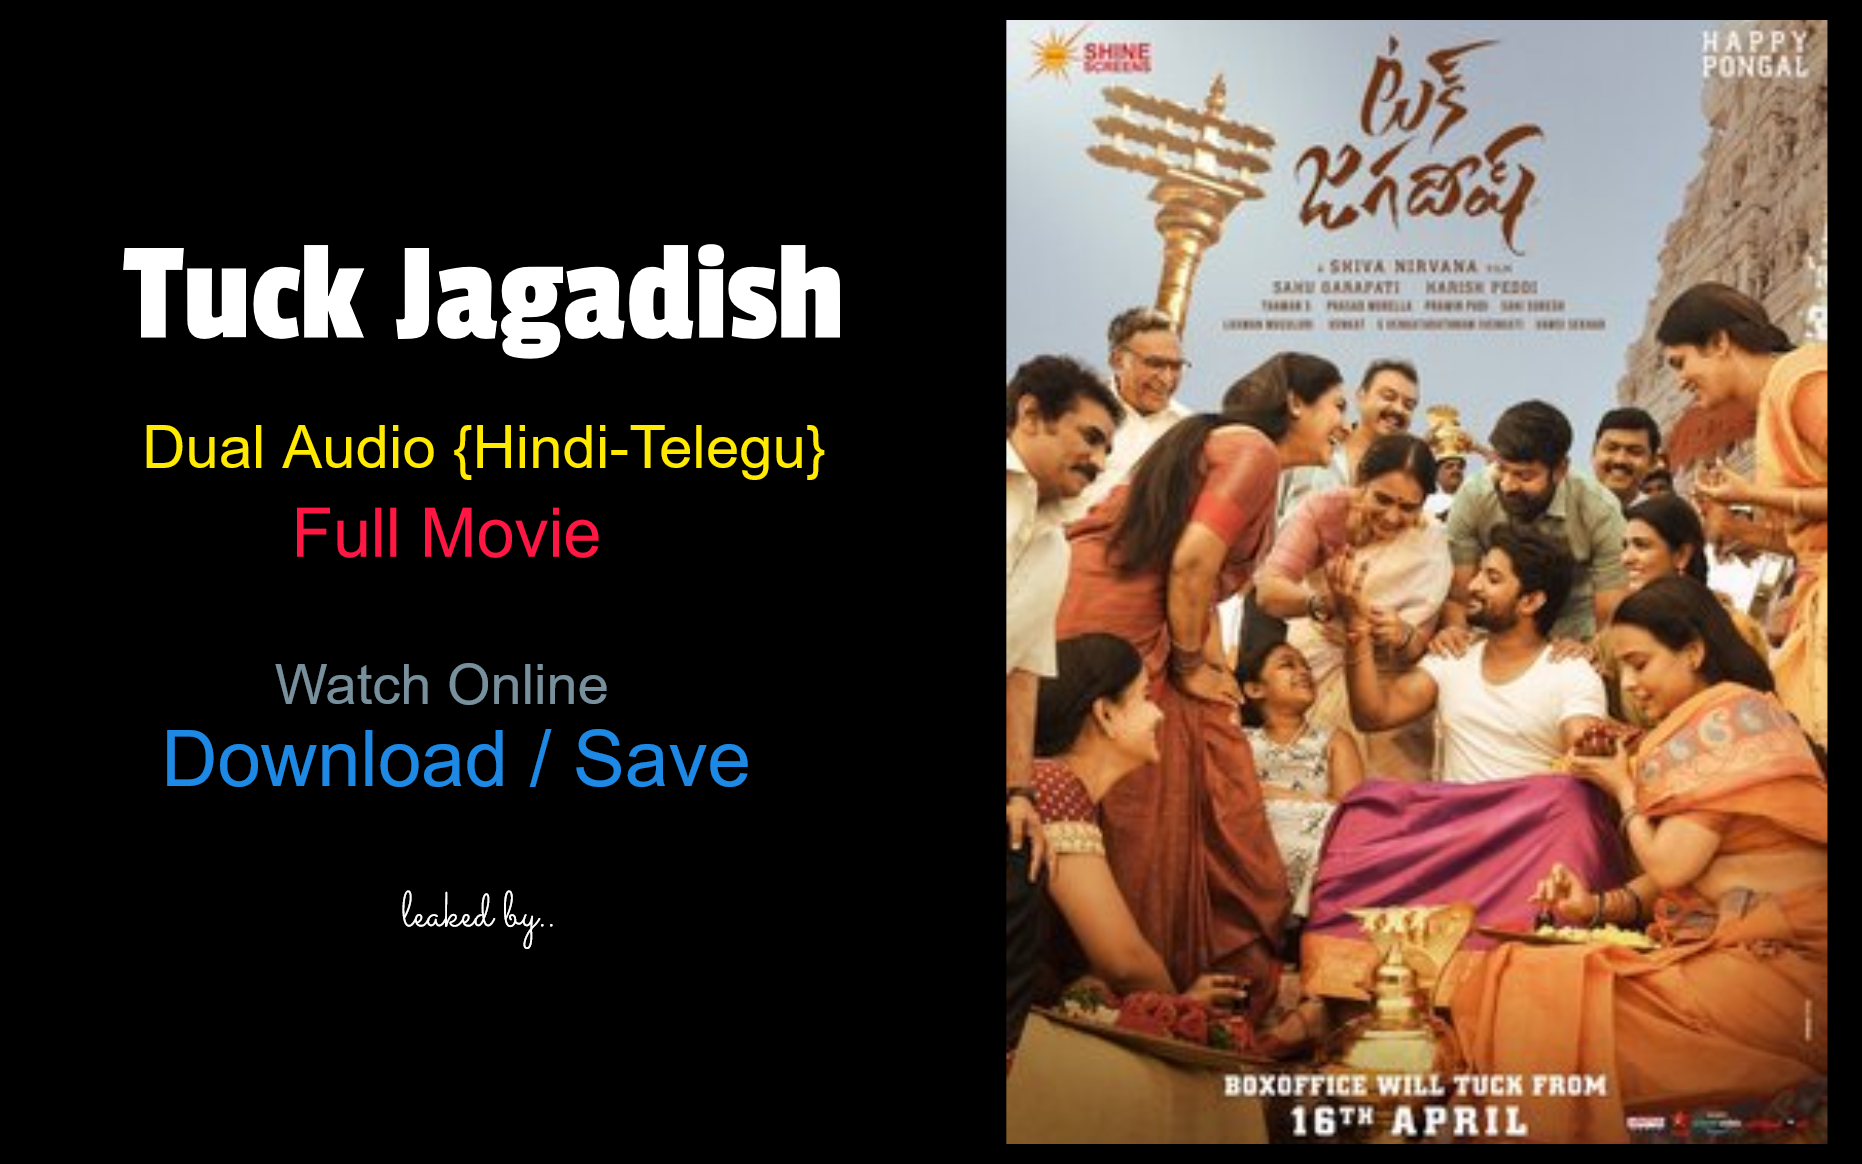 Tuck Jagadish (2021) full movie watch online download in bluray 480p, 720p, 1080p hdrip